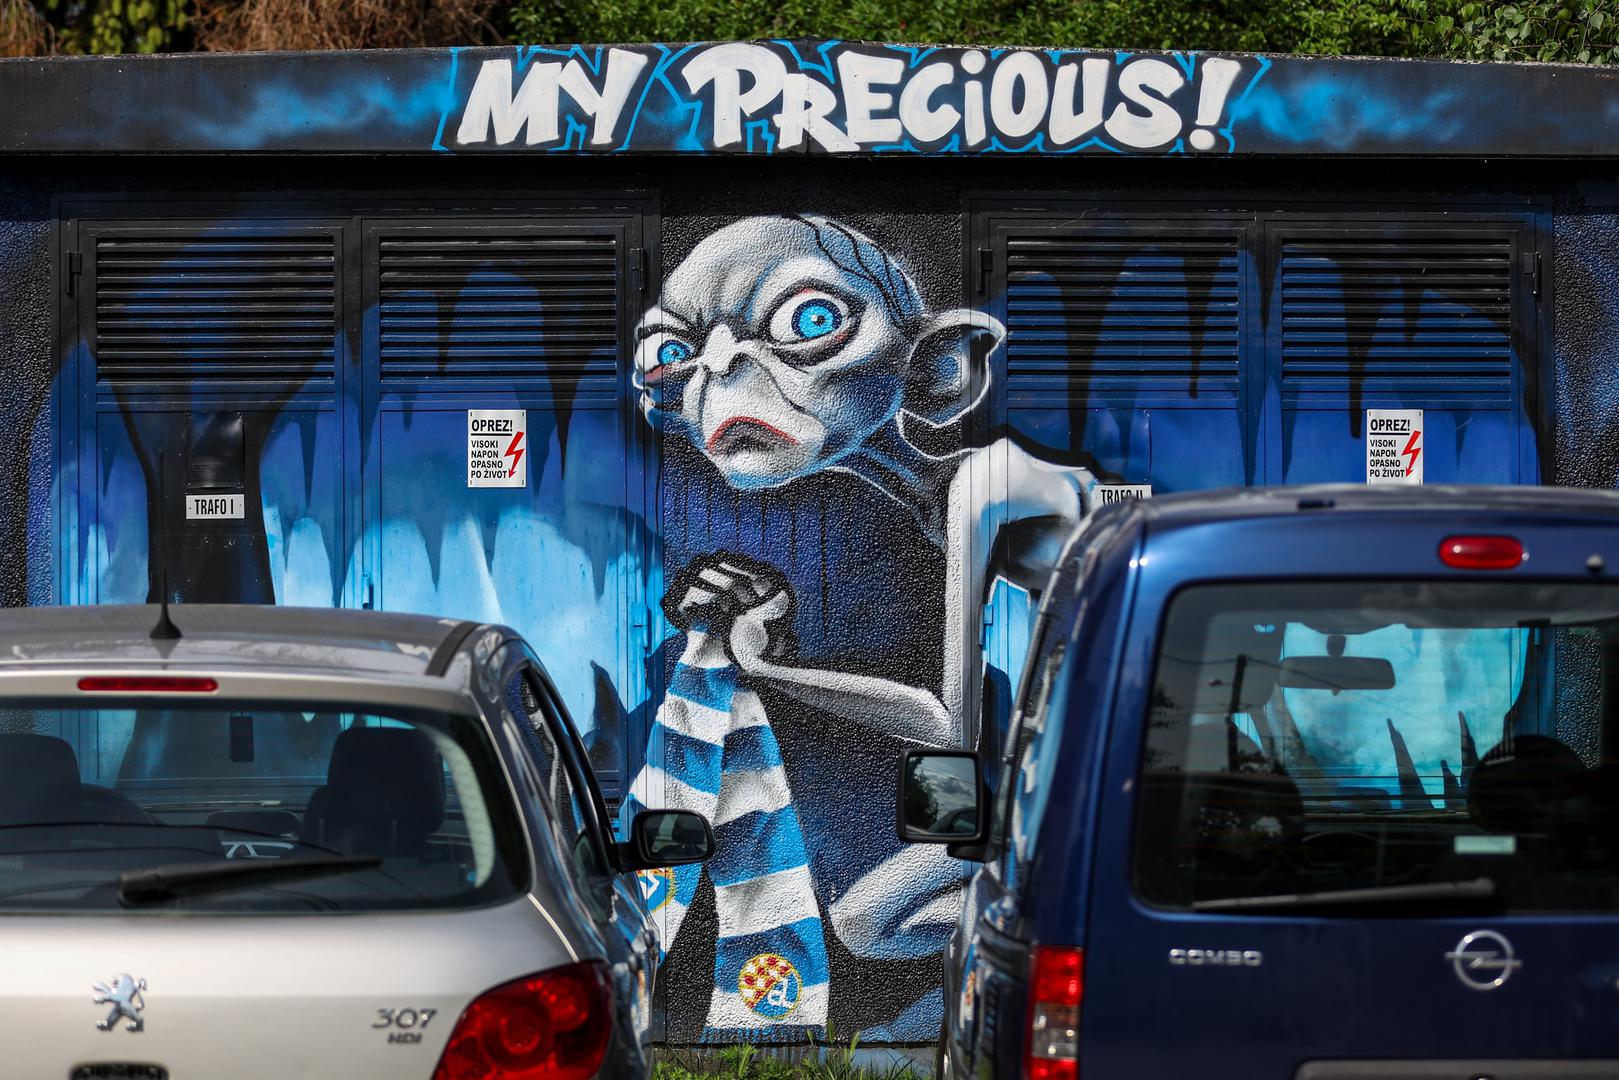 Obojan karakterističnom plavom bojom Dinama, ovaj mural prikazuje lika Golluma iz popularne triologije Gospodari prstenova kako u rukama drži Dinamov šal.
